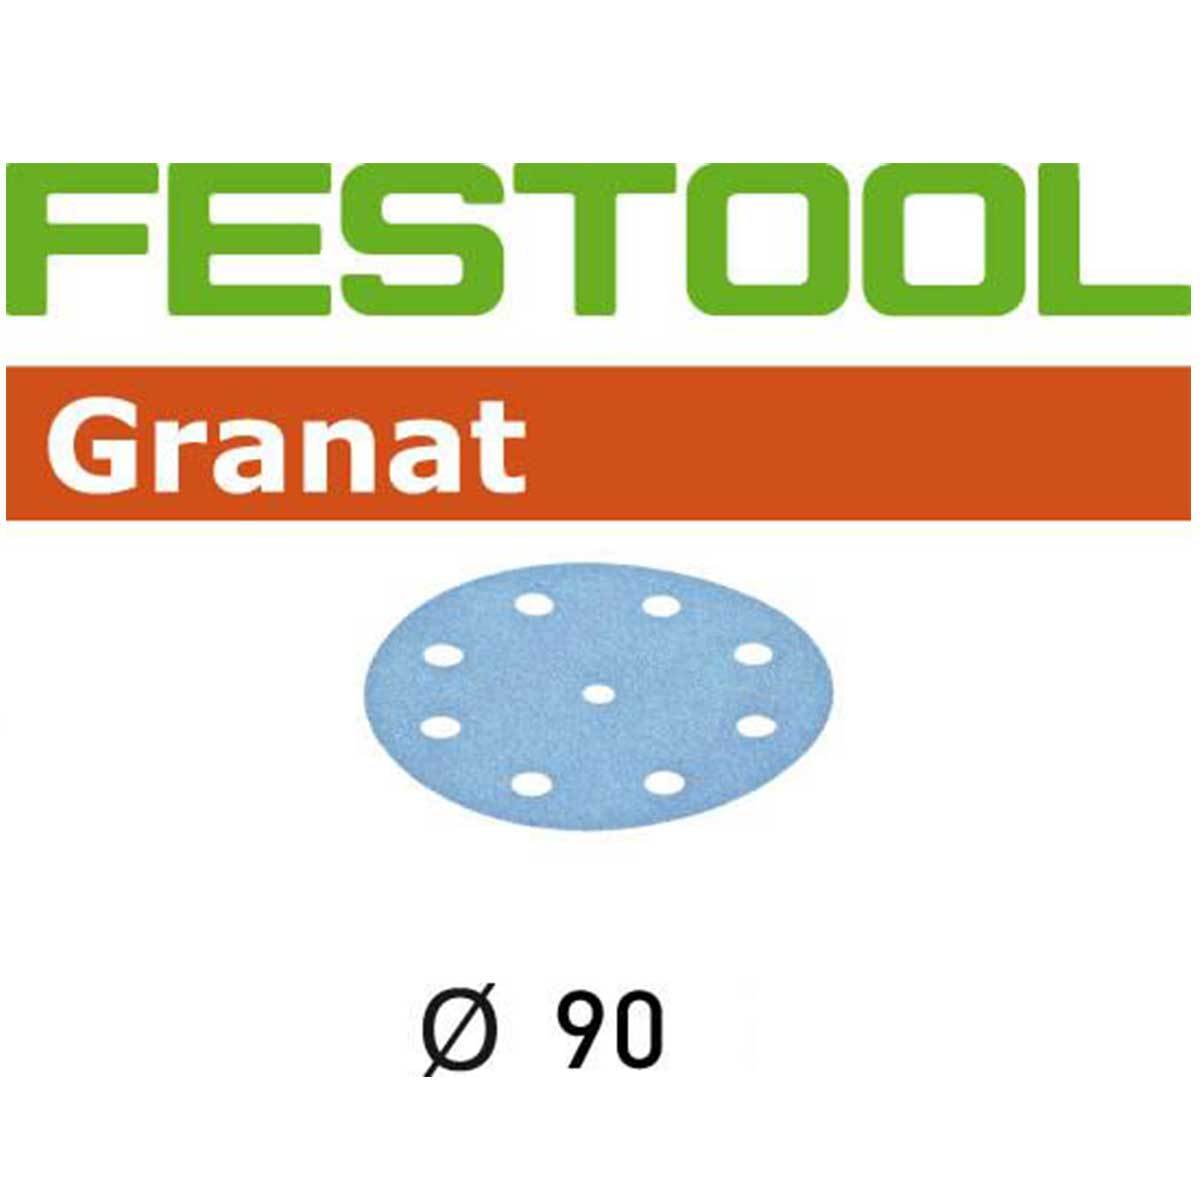 Festool 90mm (3.5") Granat StickFix abrasive disc for RO 90 Rotex multi-mode detail sander.